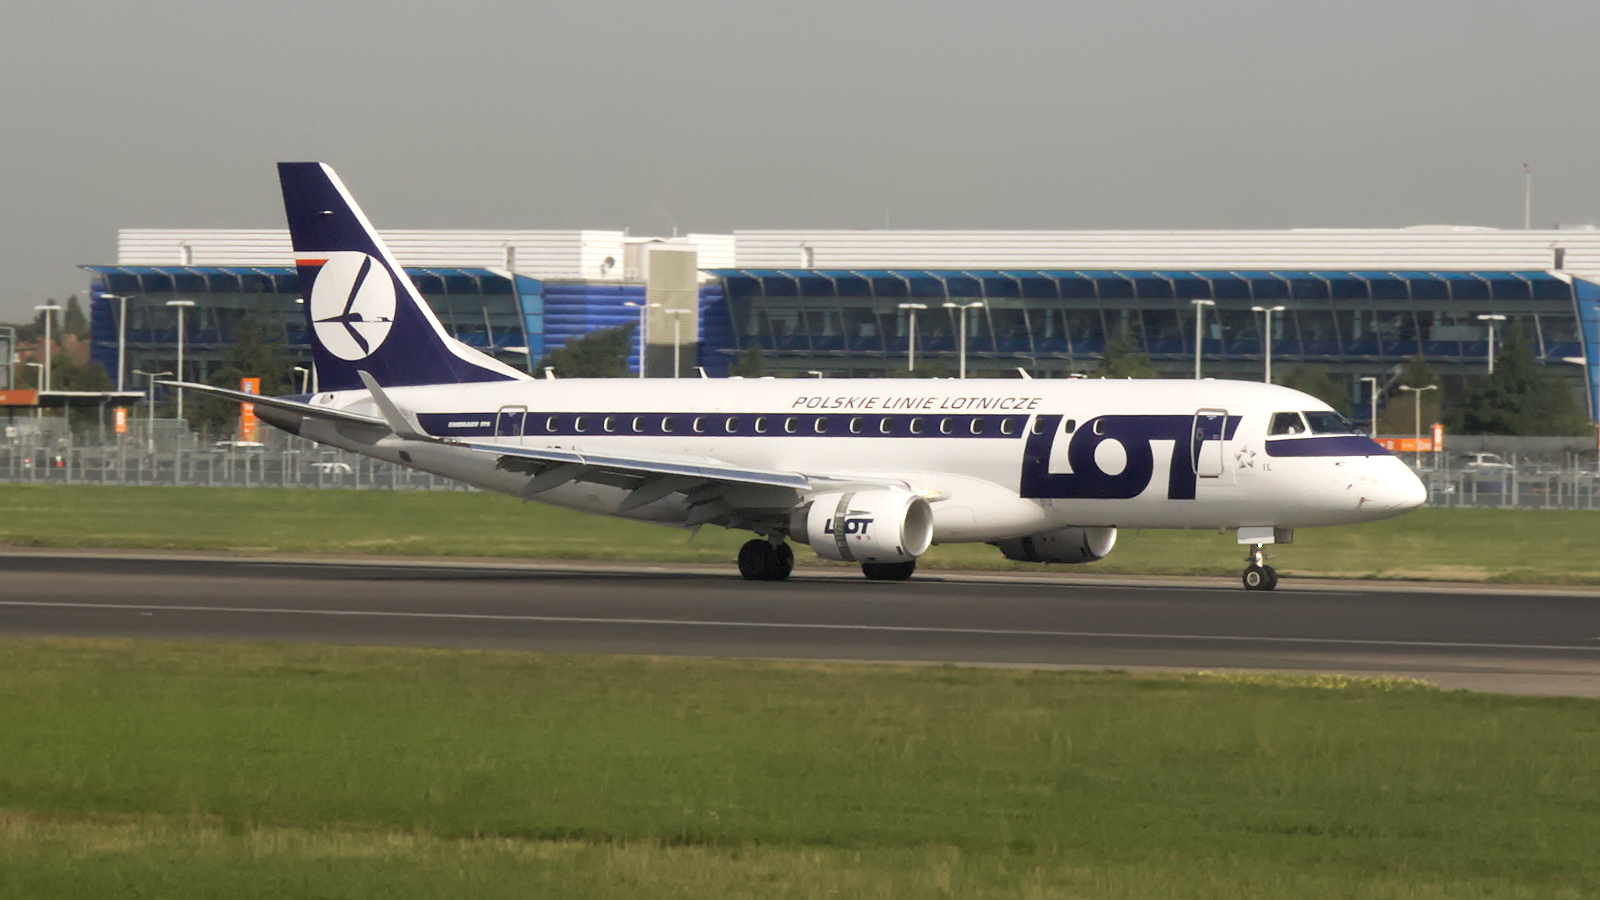 SP-LIL ✈ LOT Polish Airlines Embraer ERJ-175LR @ London-Heathrow